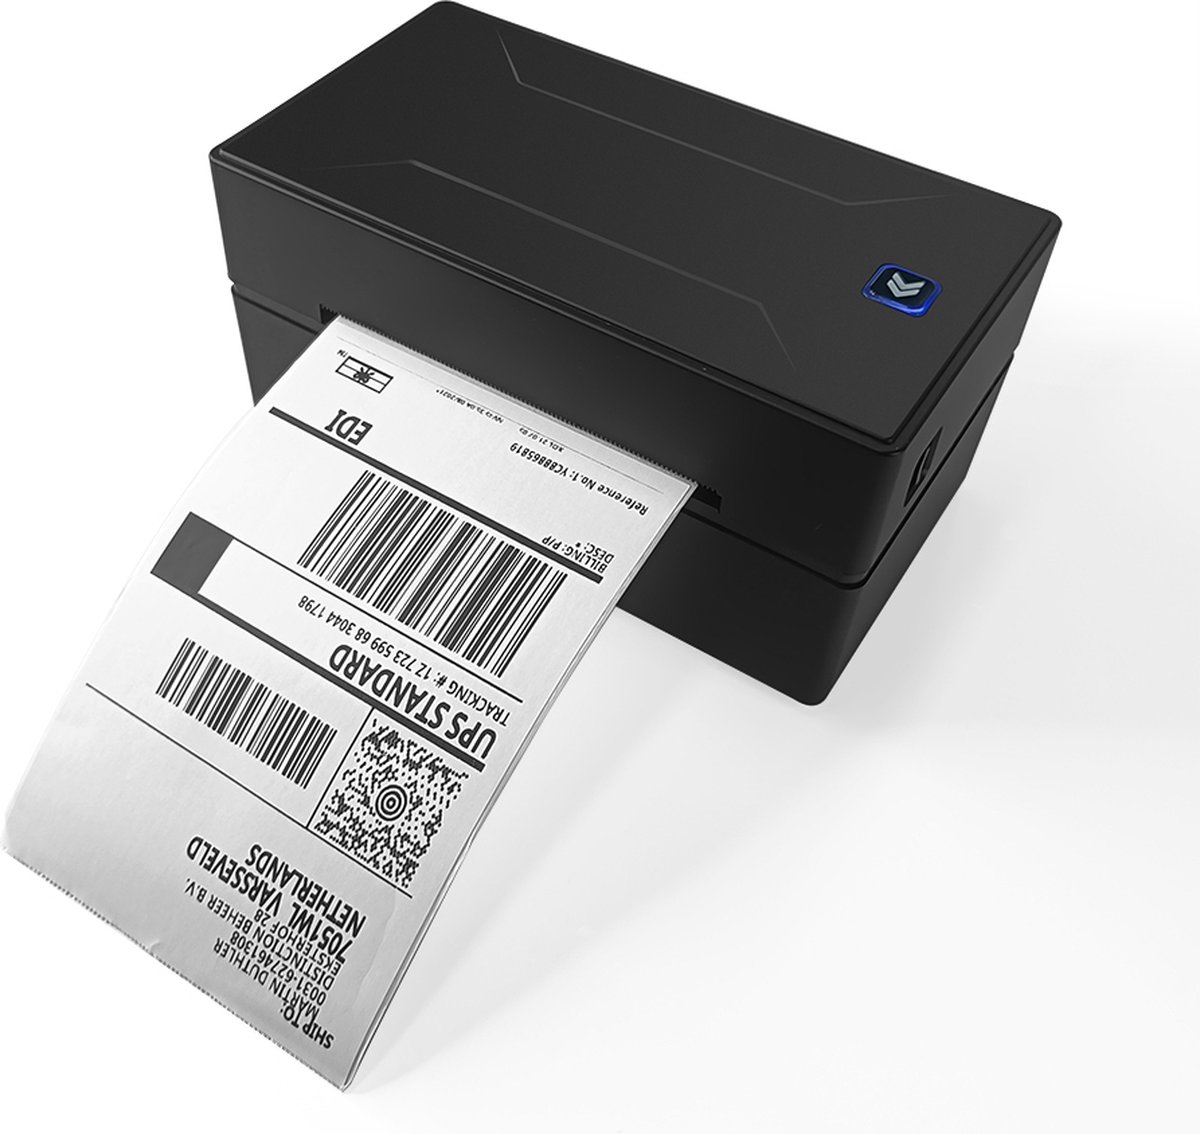 Thermische Label Printer - Bluetooth - USB verbinding - Bluetooth Thermal Label Printer - Snel Printen - Thuisgebruik - Kantoor Printer - 100 mm x 150 mm Labels - Thermal Label Printer